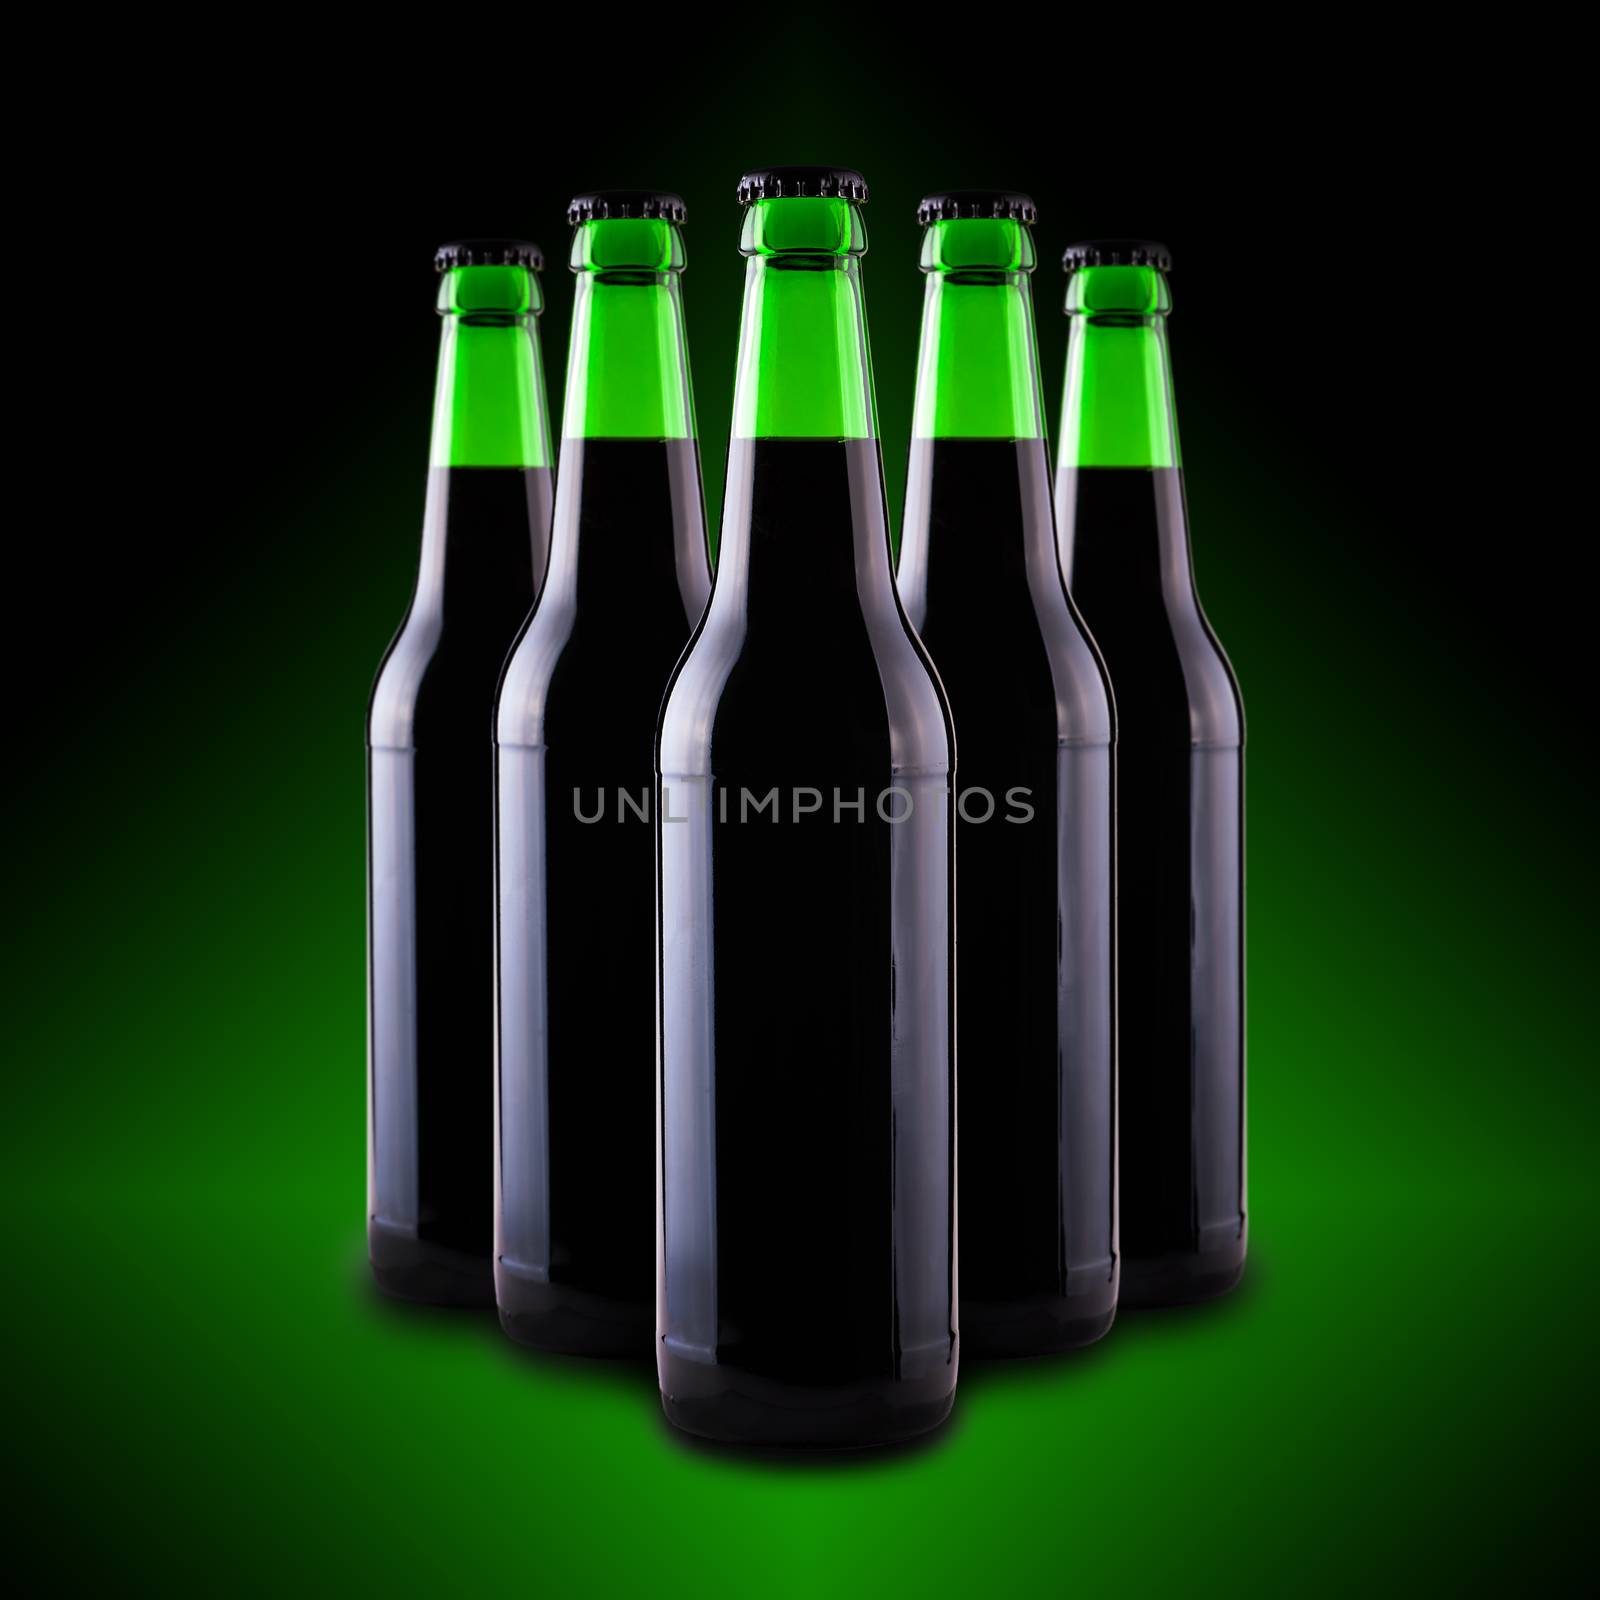 beer in glass bottles on a dark background